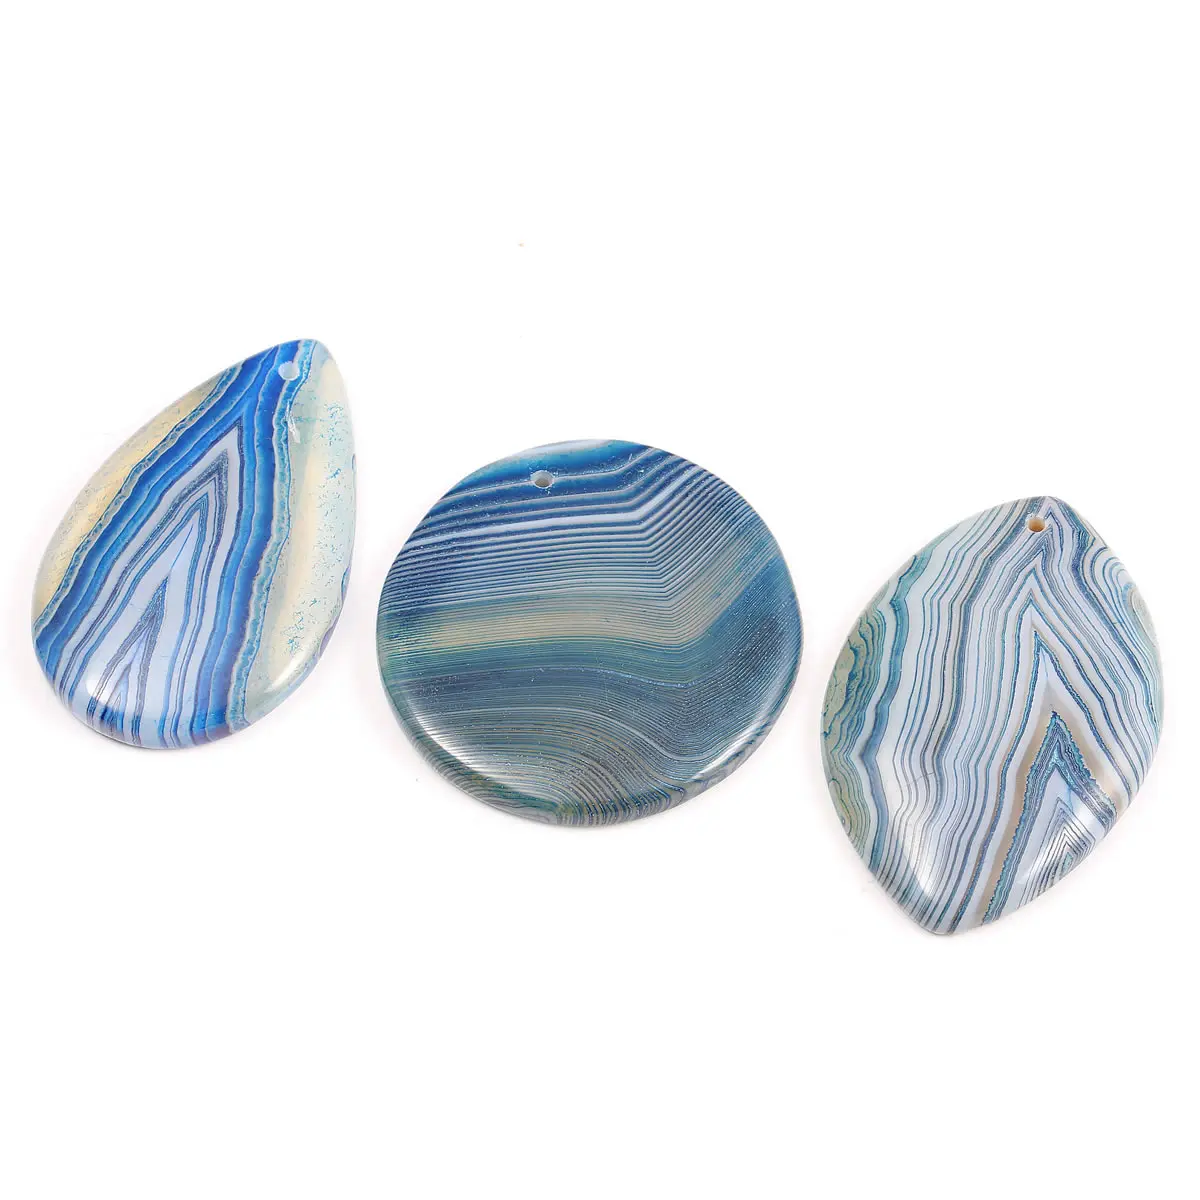 

5pcs / Lot Blue Striped Agates Pendant Reiki Healing Natural Stone Meditation Amulet DIY Jewelry Natural Stone Charms